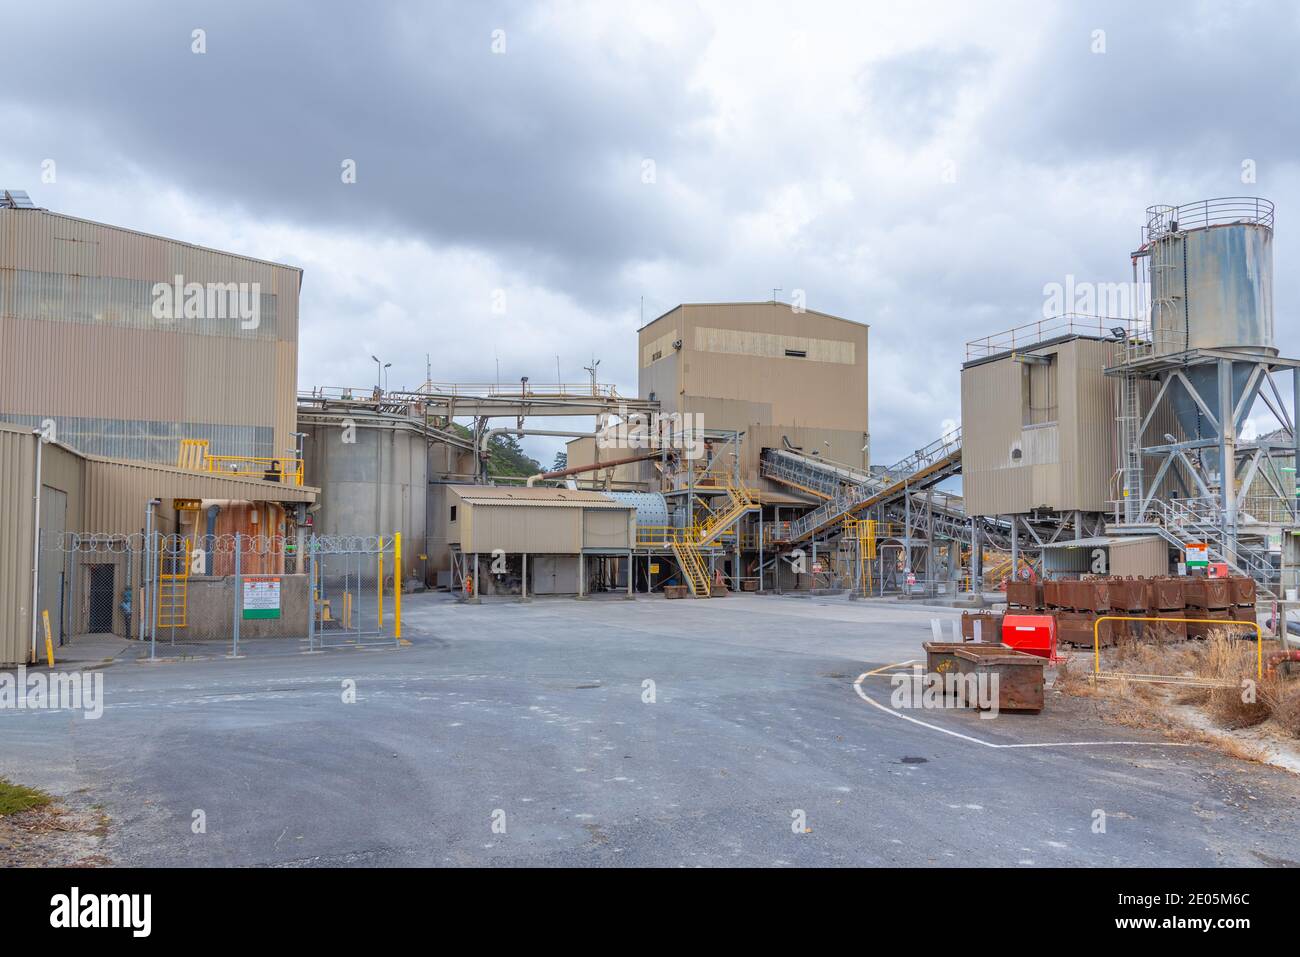 WAIHI, NEW ZEALAND, FEBRUARY 16, 2020: Ore processing plant at Waihi, New Zealand Stock Photo